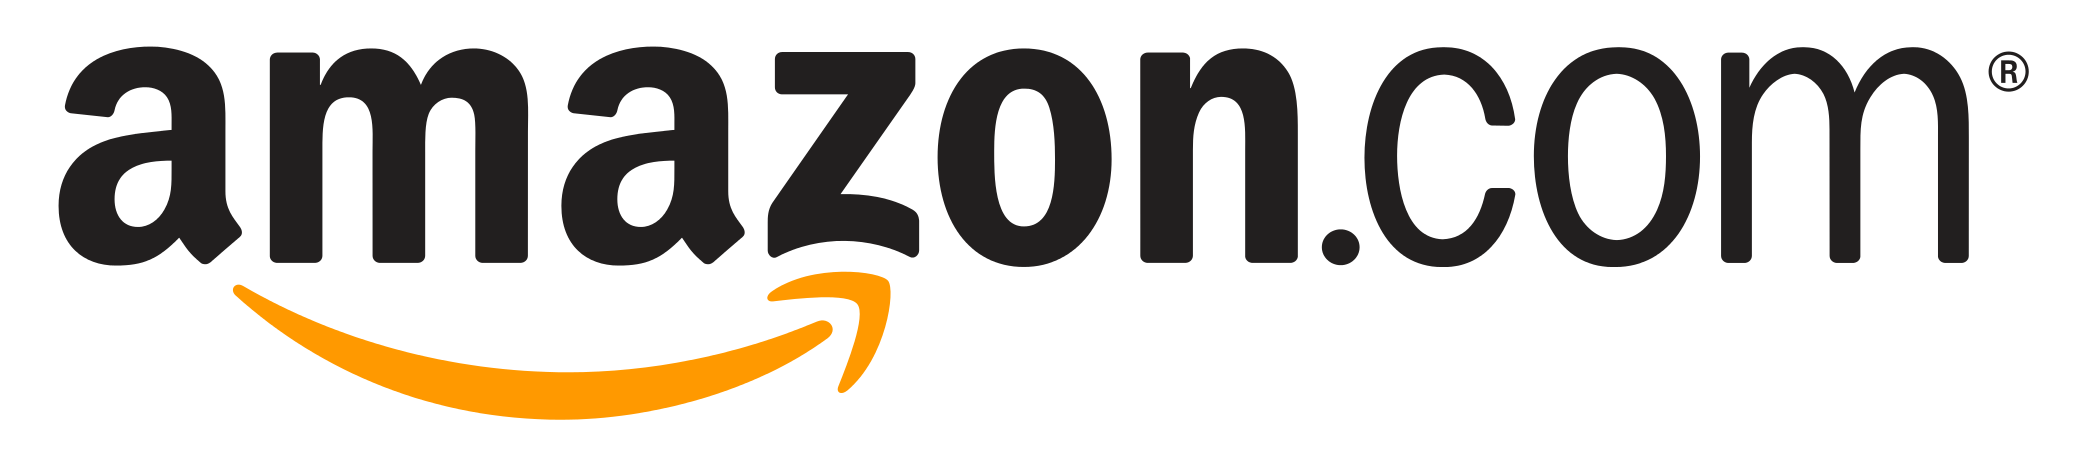 Amazon.Com Logo